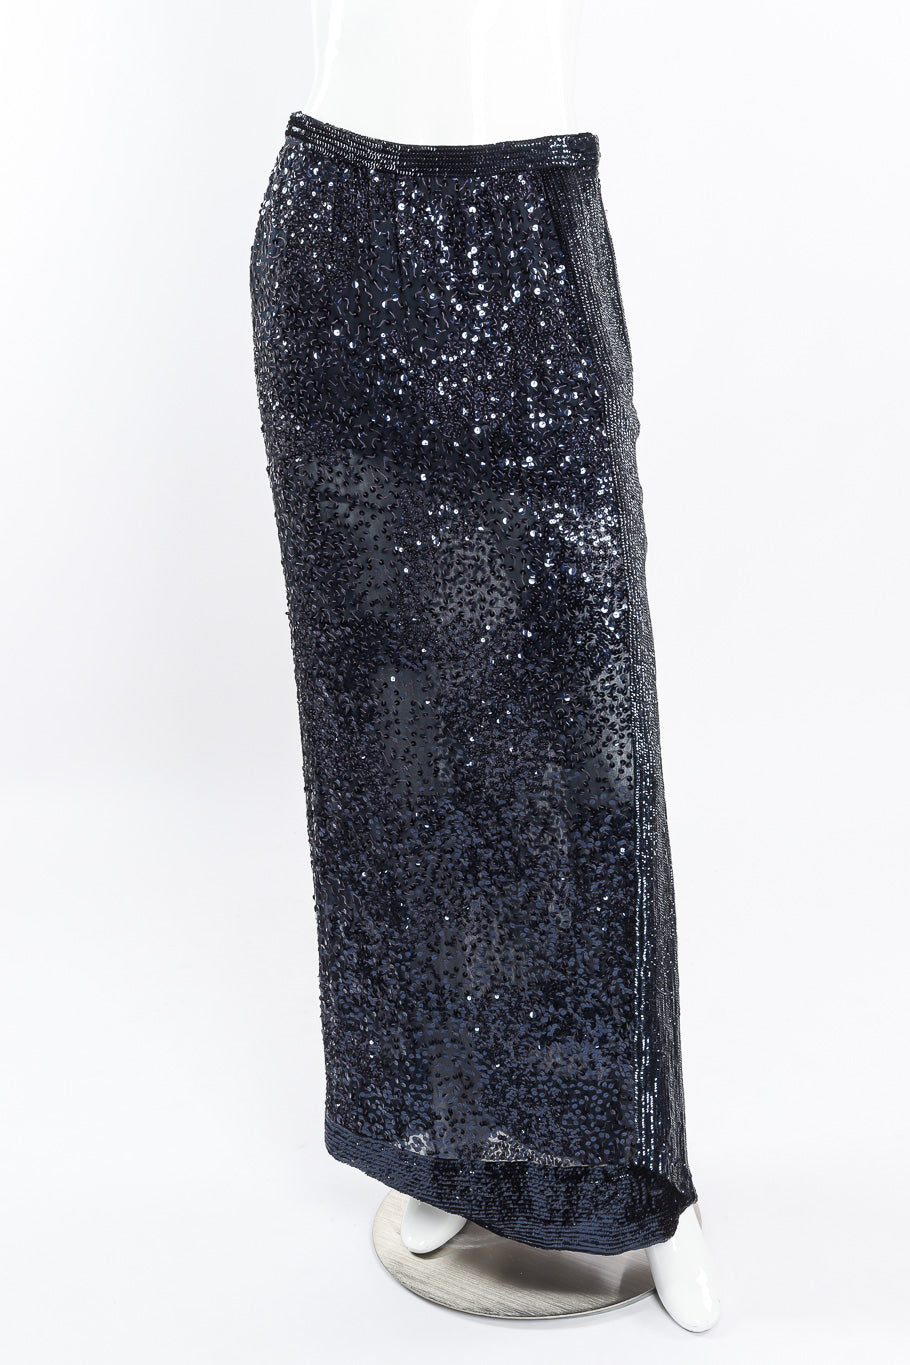 Midnight sequin skirt by Gianfranco Ferre on mannequin front @recessla